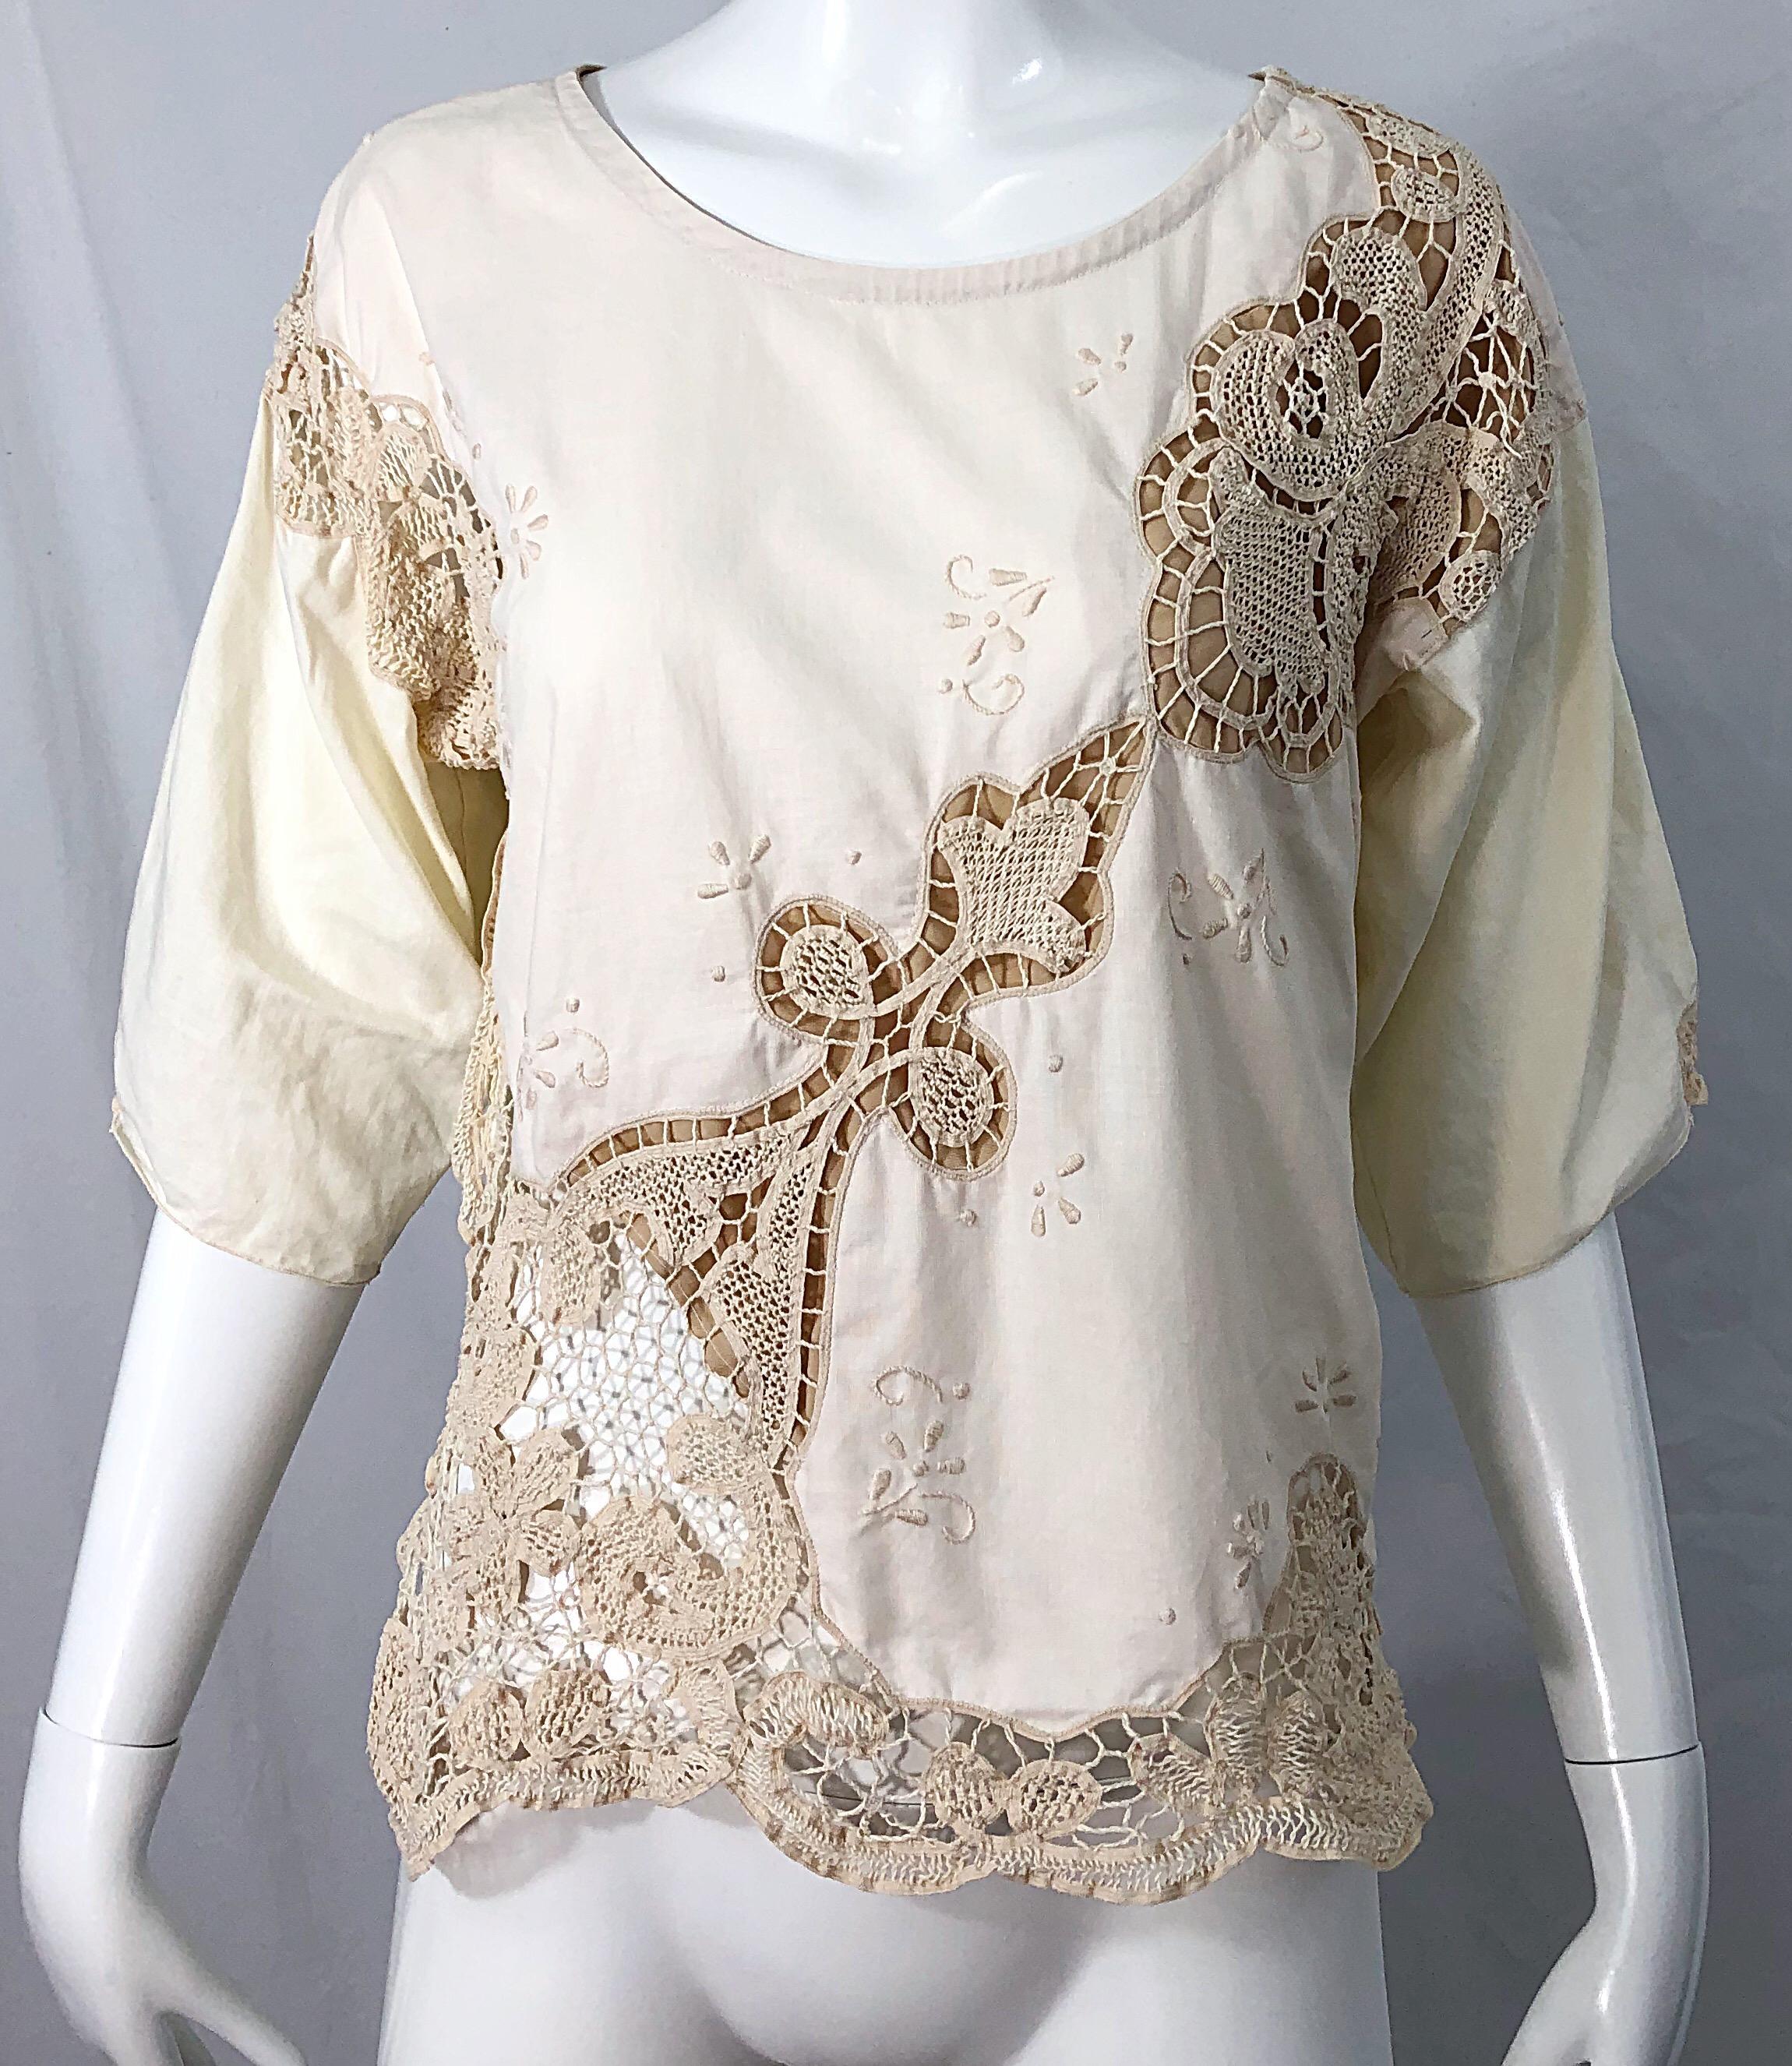 Women's 1980s Ivory Cotton Crochet Boho Shirt / Skirt Vintage 80s Dress Ensemble Set